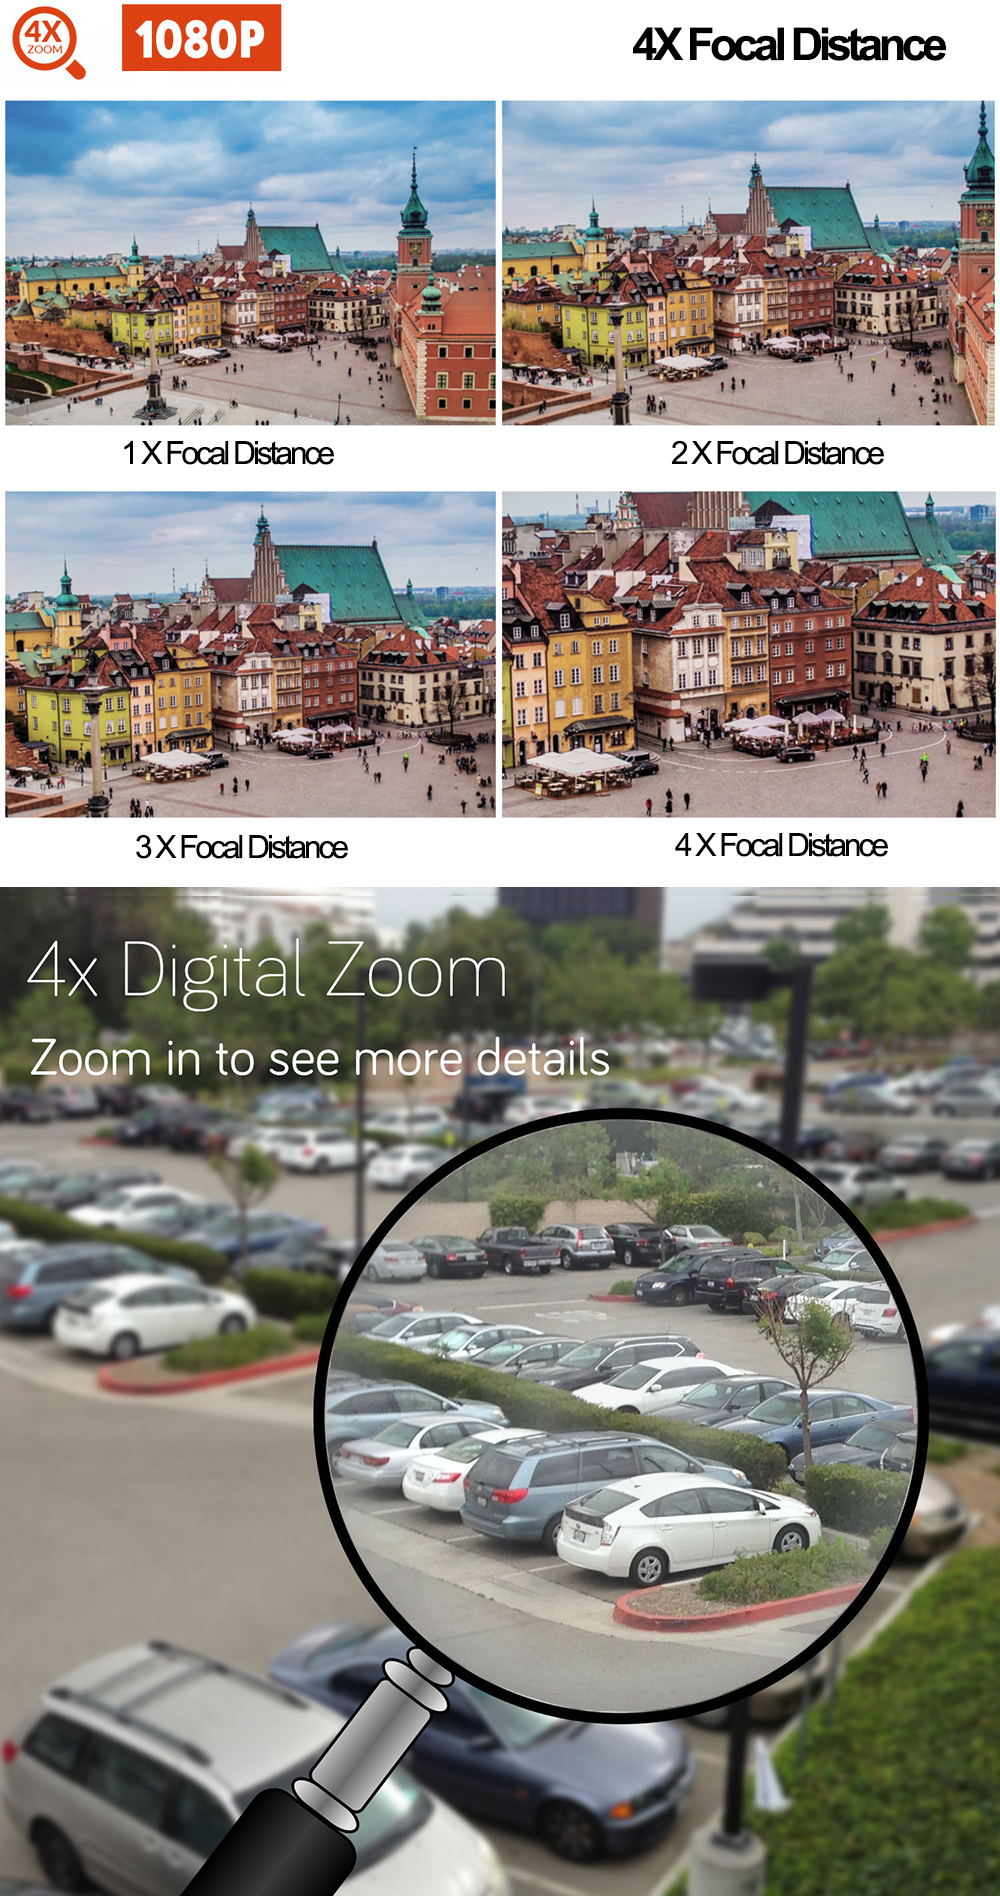 Variable focal length, providing 4x optical zoom and 4x digital zoom capability